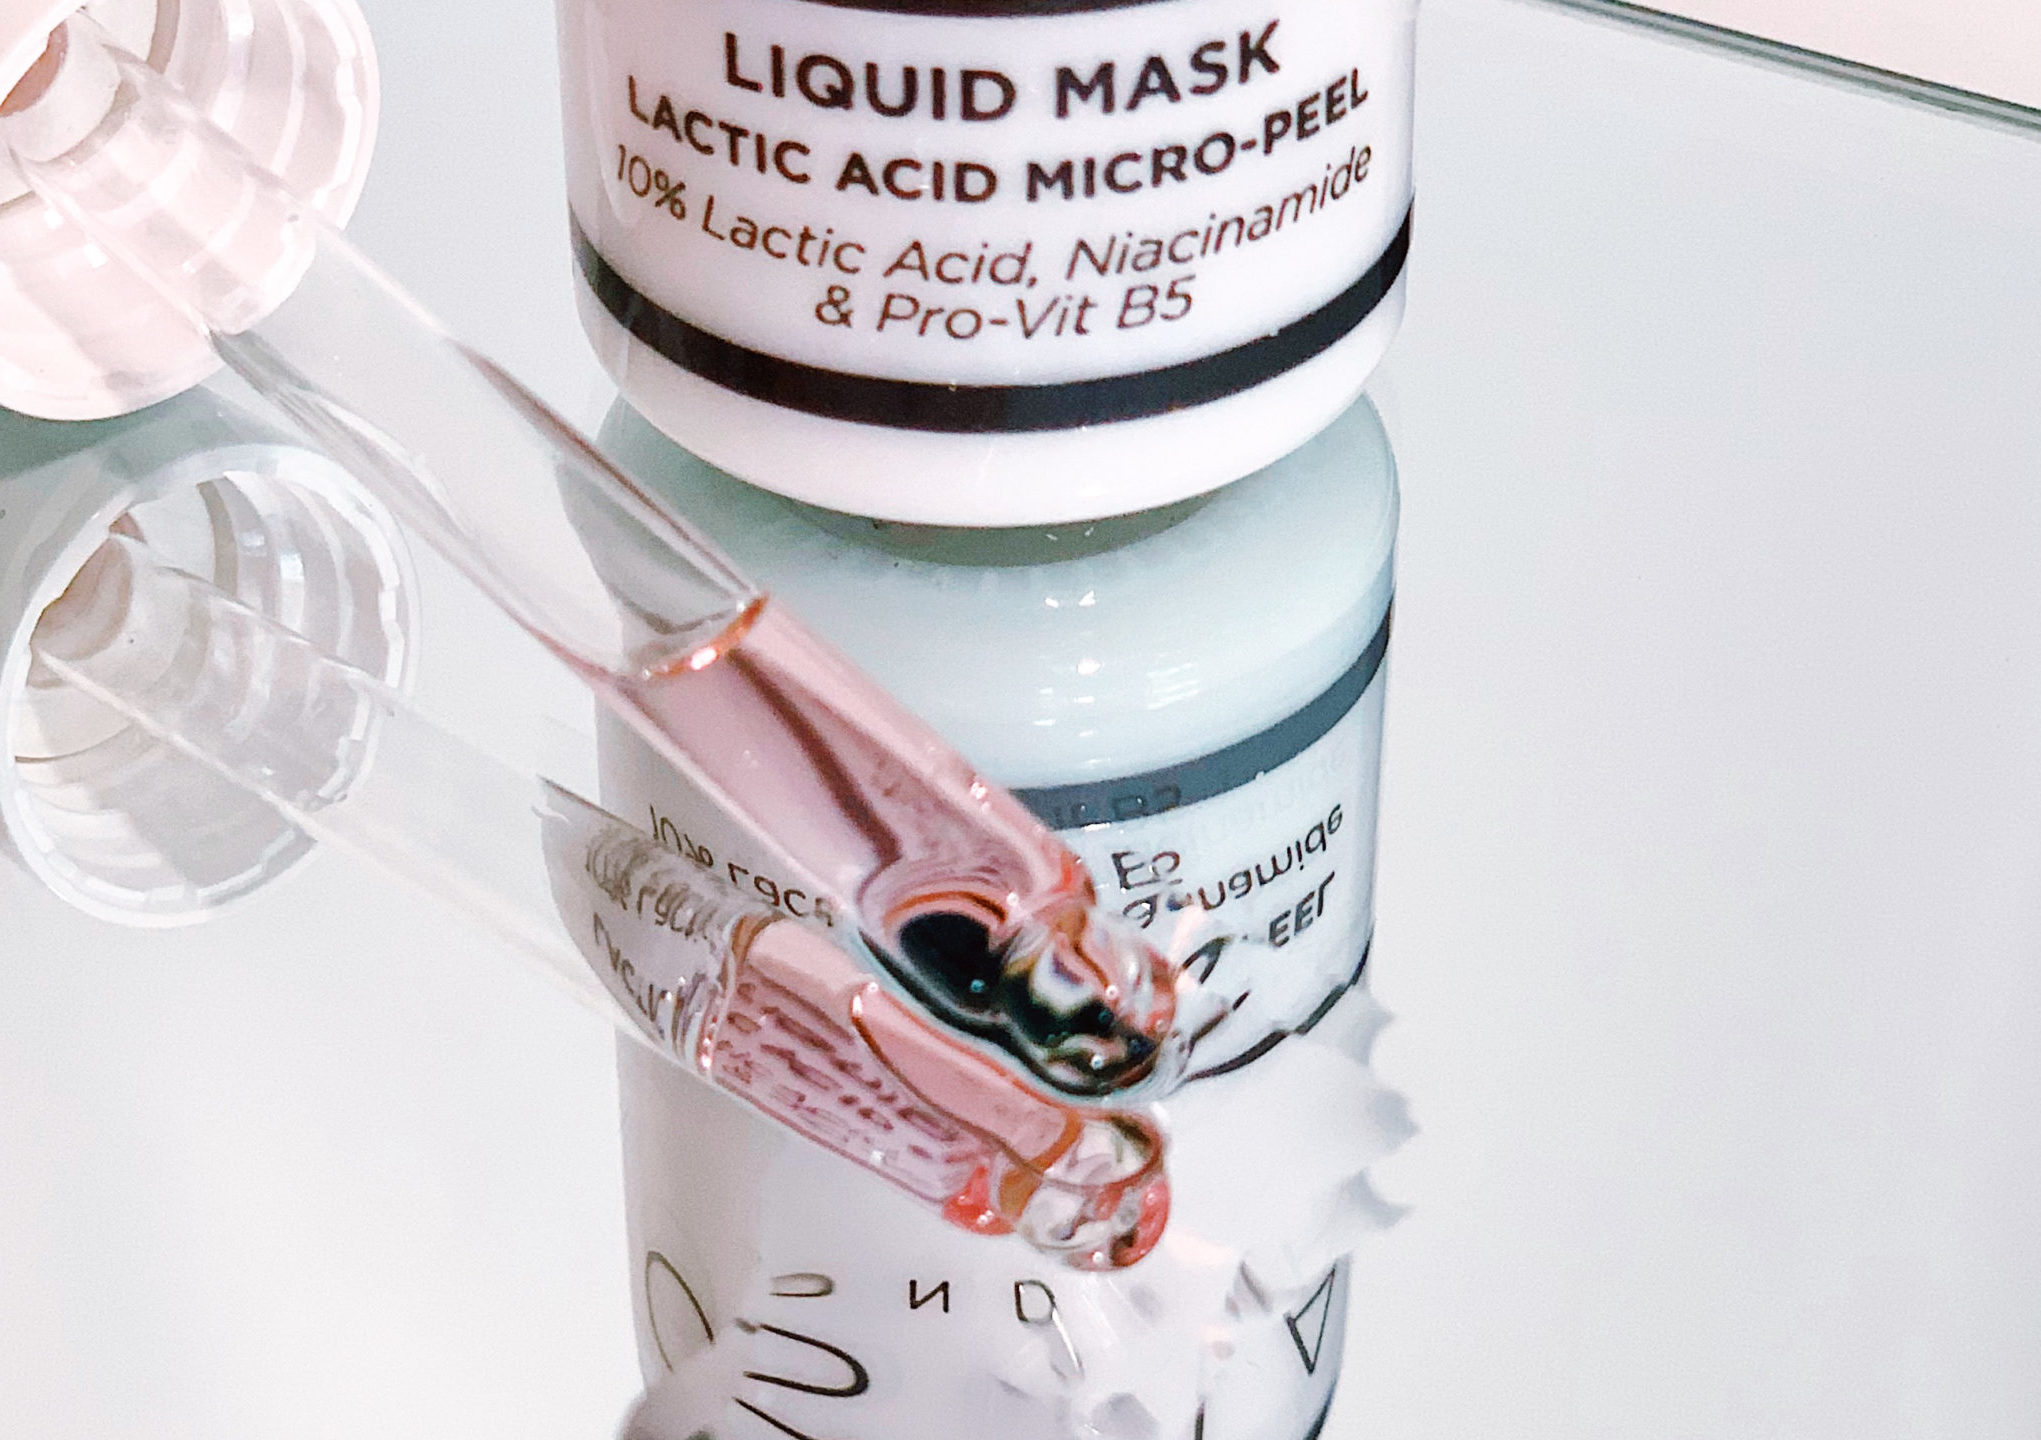 OSKIA Liquid Mask · the beauty endeavor